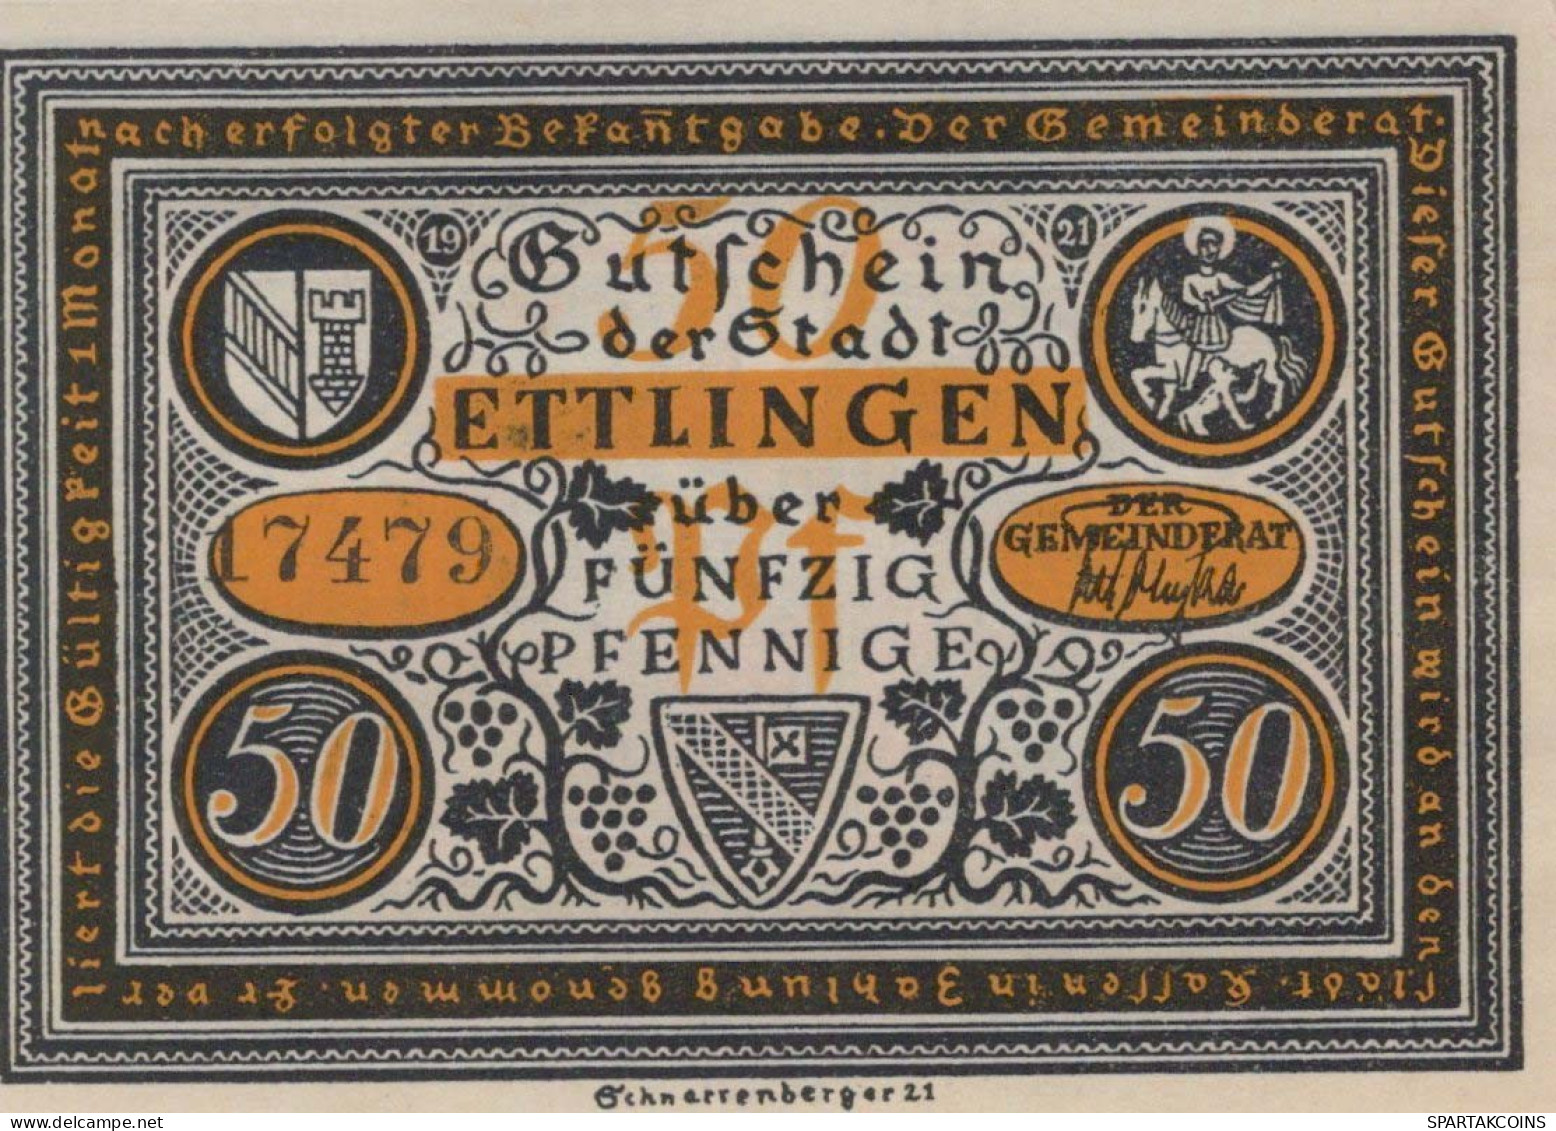 50 PFENNIG 1921 Stadt ETTLINGEN Baden UNC DEUTSCHLAND Notgeld Banknote #PB363 - [11] Local Banknote Issues